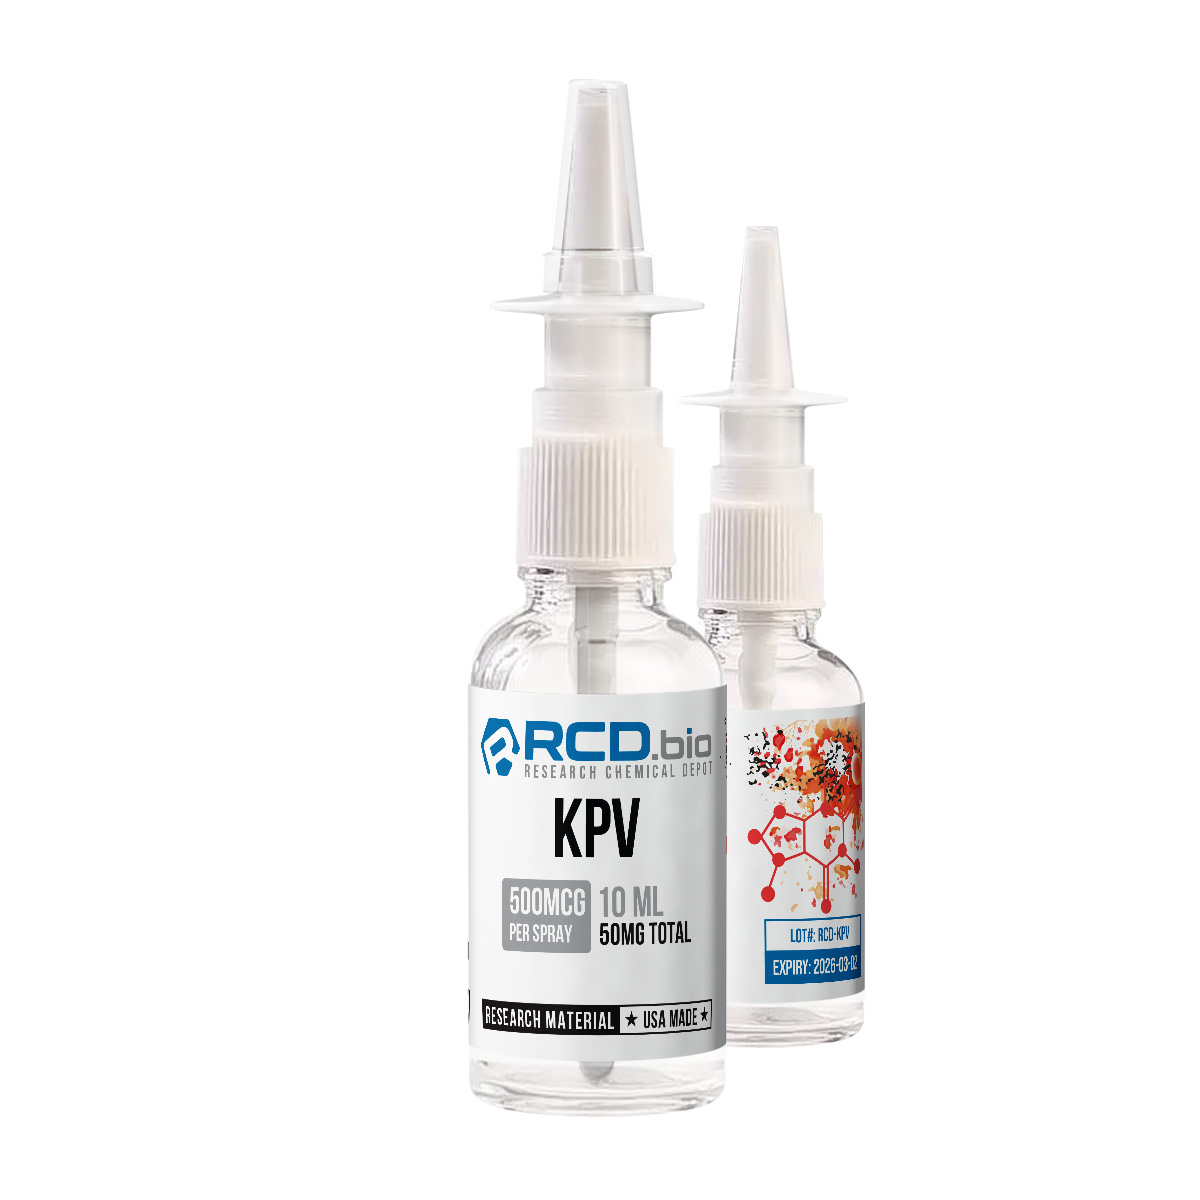 KPV (Lysine-Proline-Valine) Nasal Spray For Sale | RCD.bio